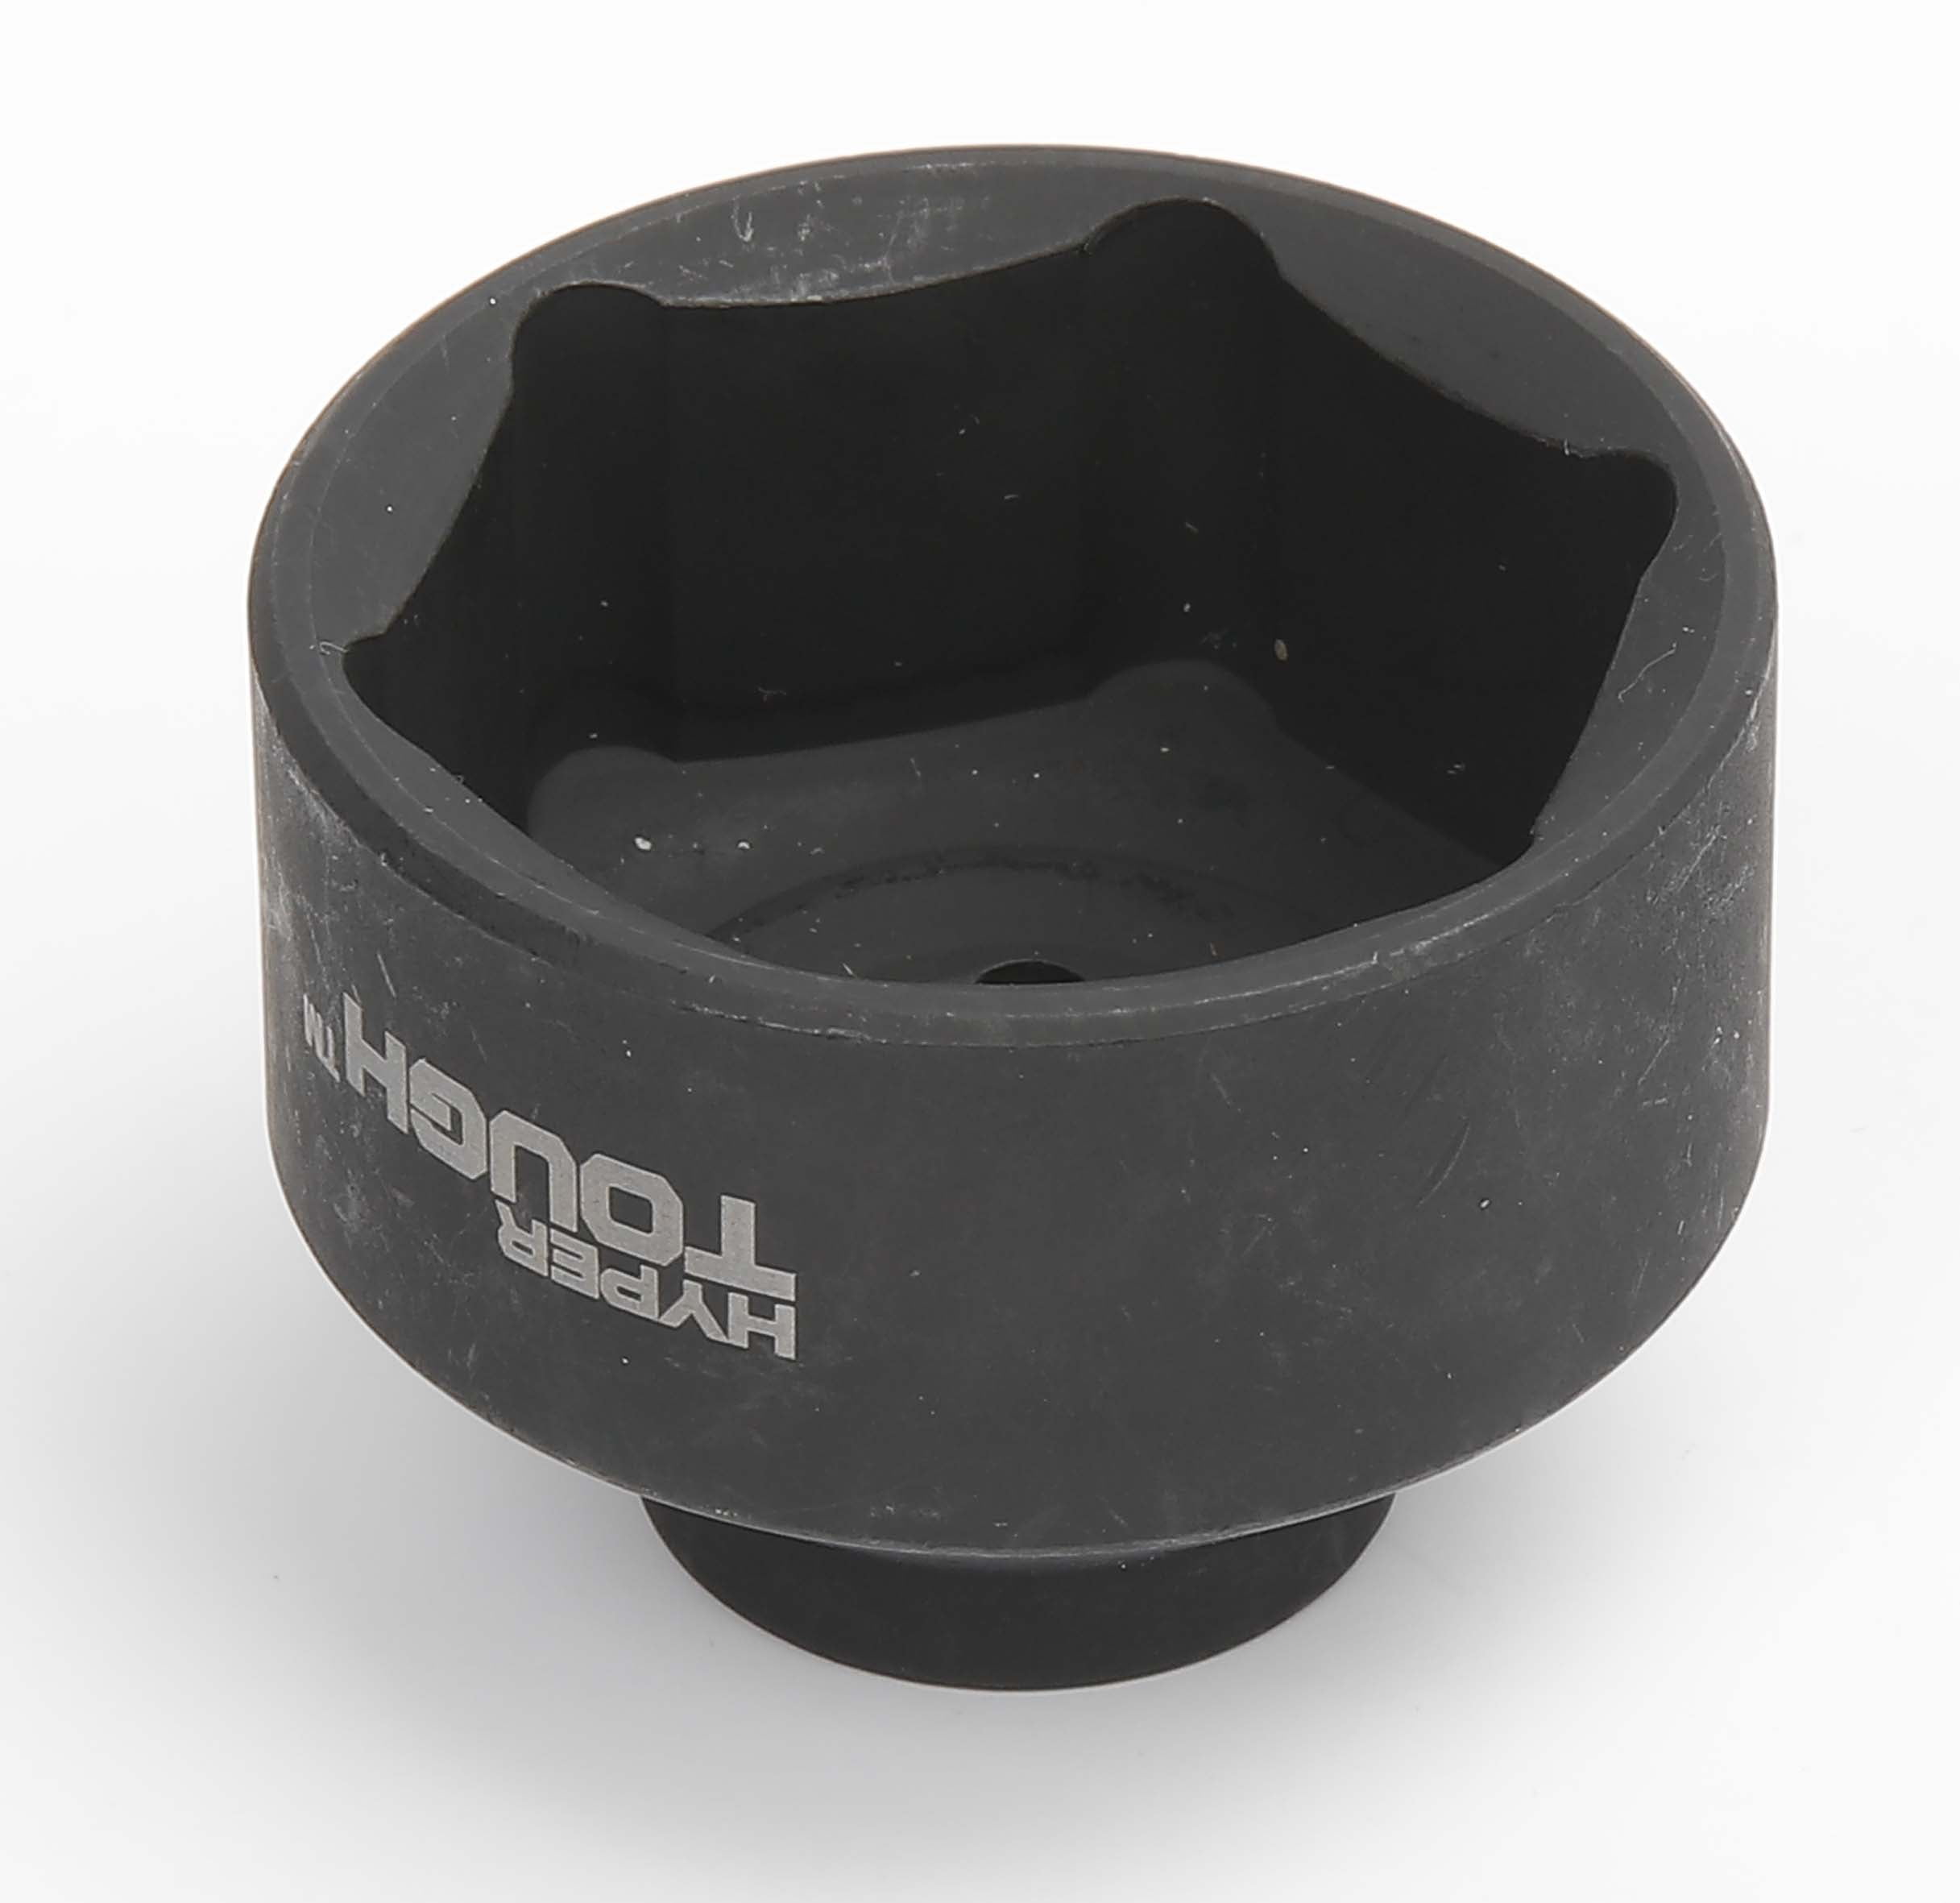 Hyper Tough 32MM Oil Filter Socket, Use with 3/8-Inch Drive Ratchet, Black, Model 6201